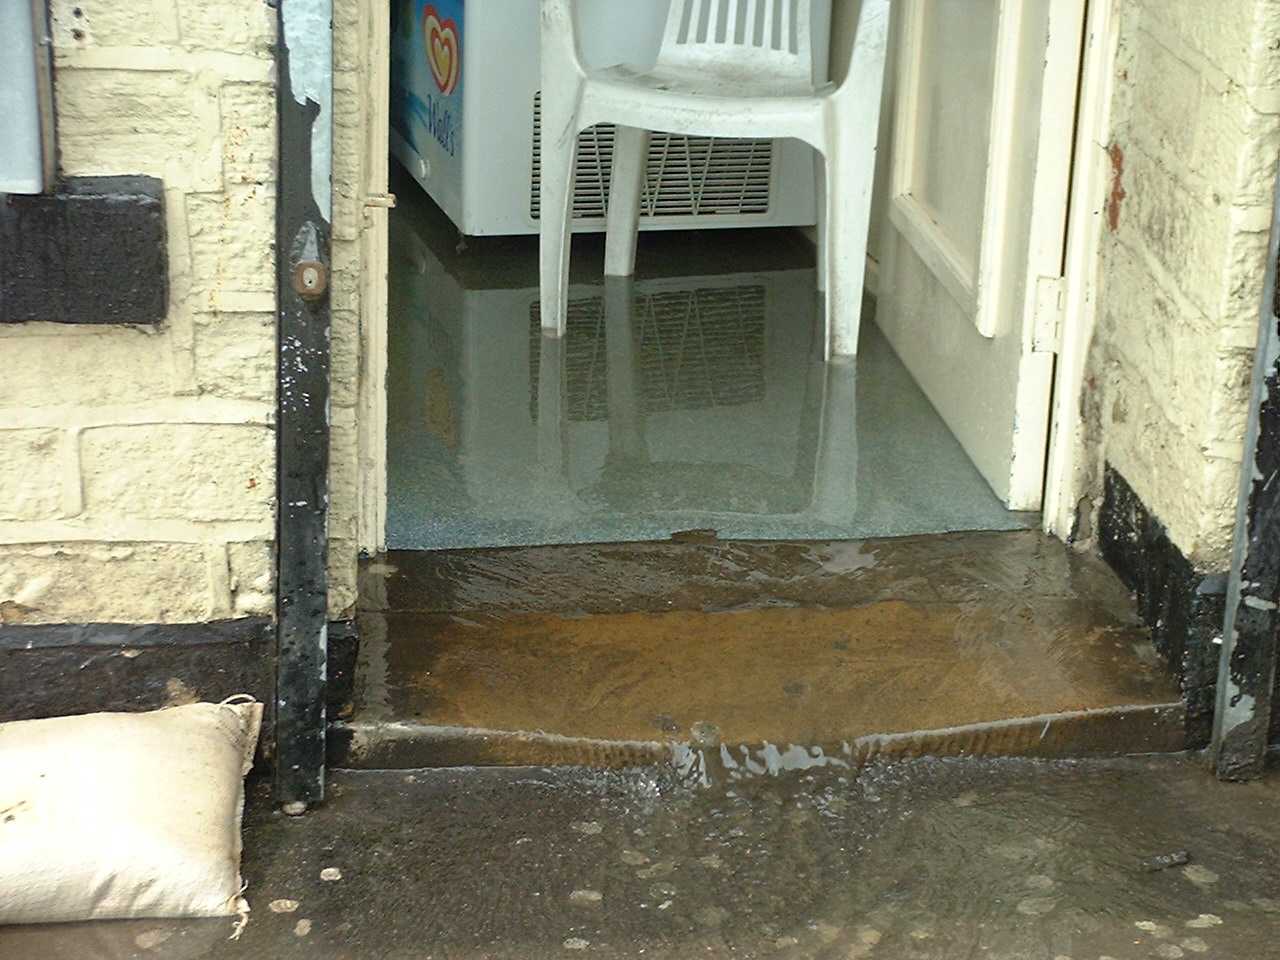 Storm sewage flooding